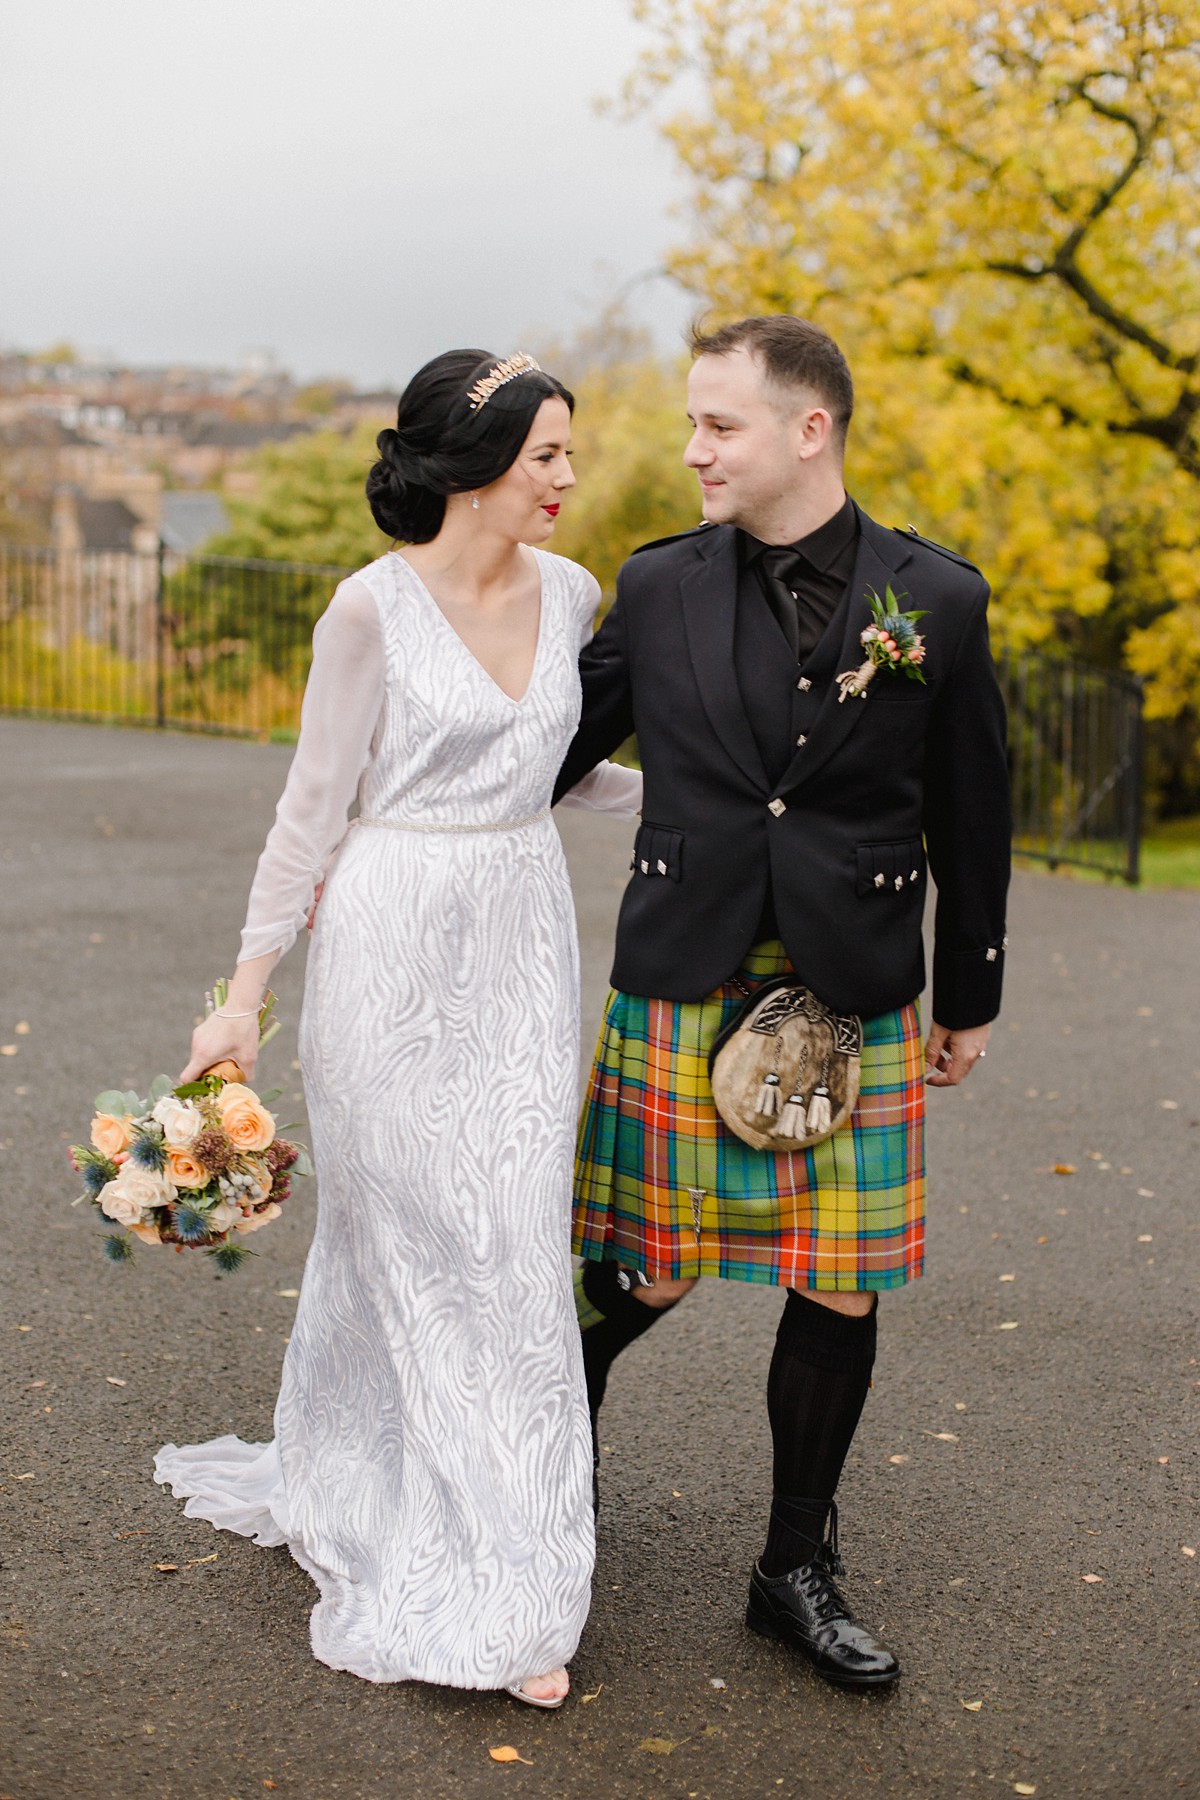 Small stylish intimate Scottish wedding 9